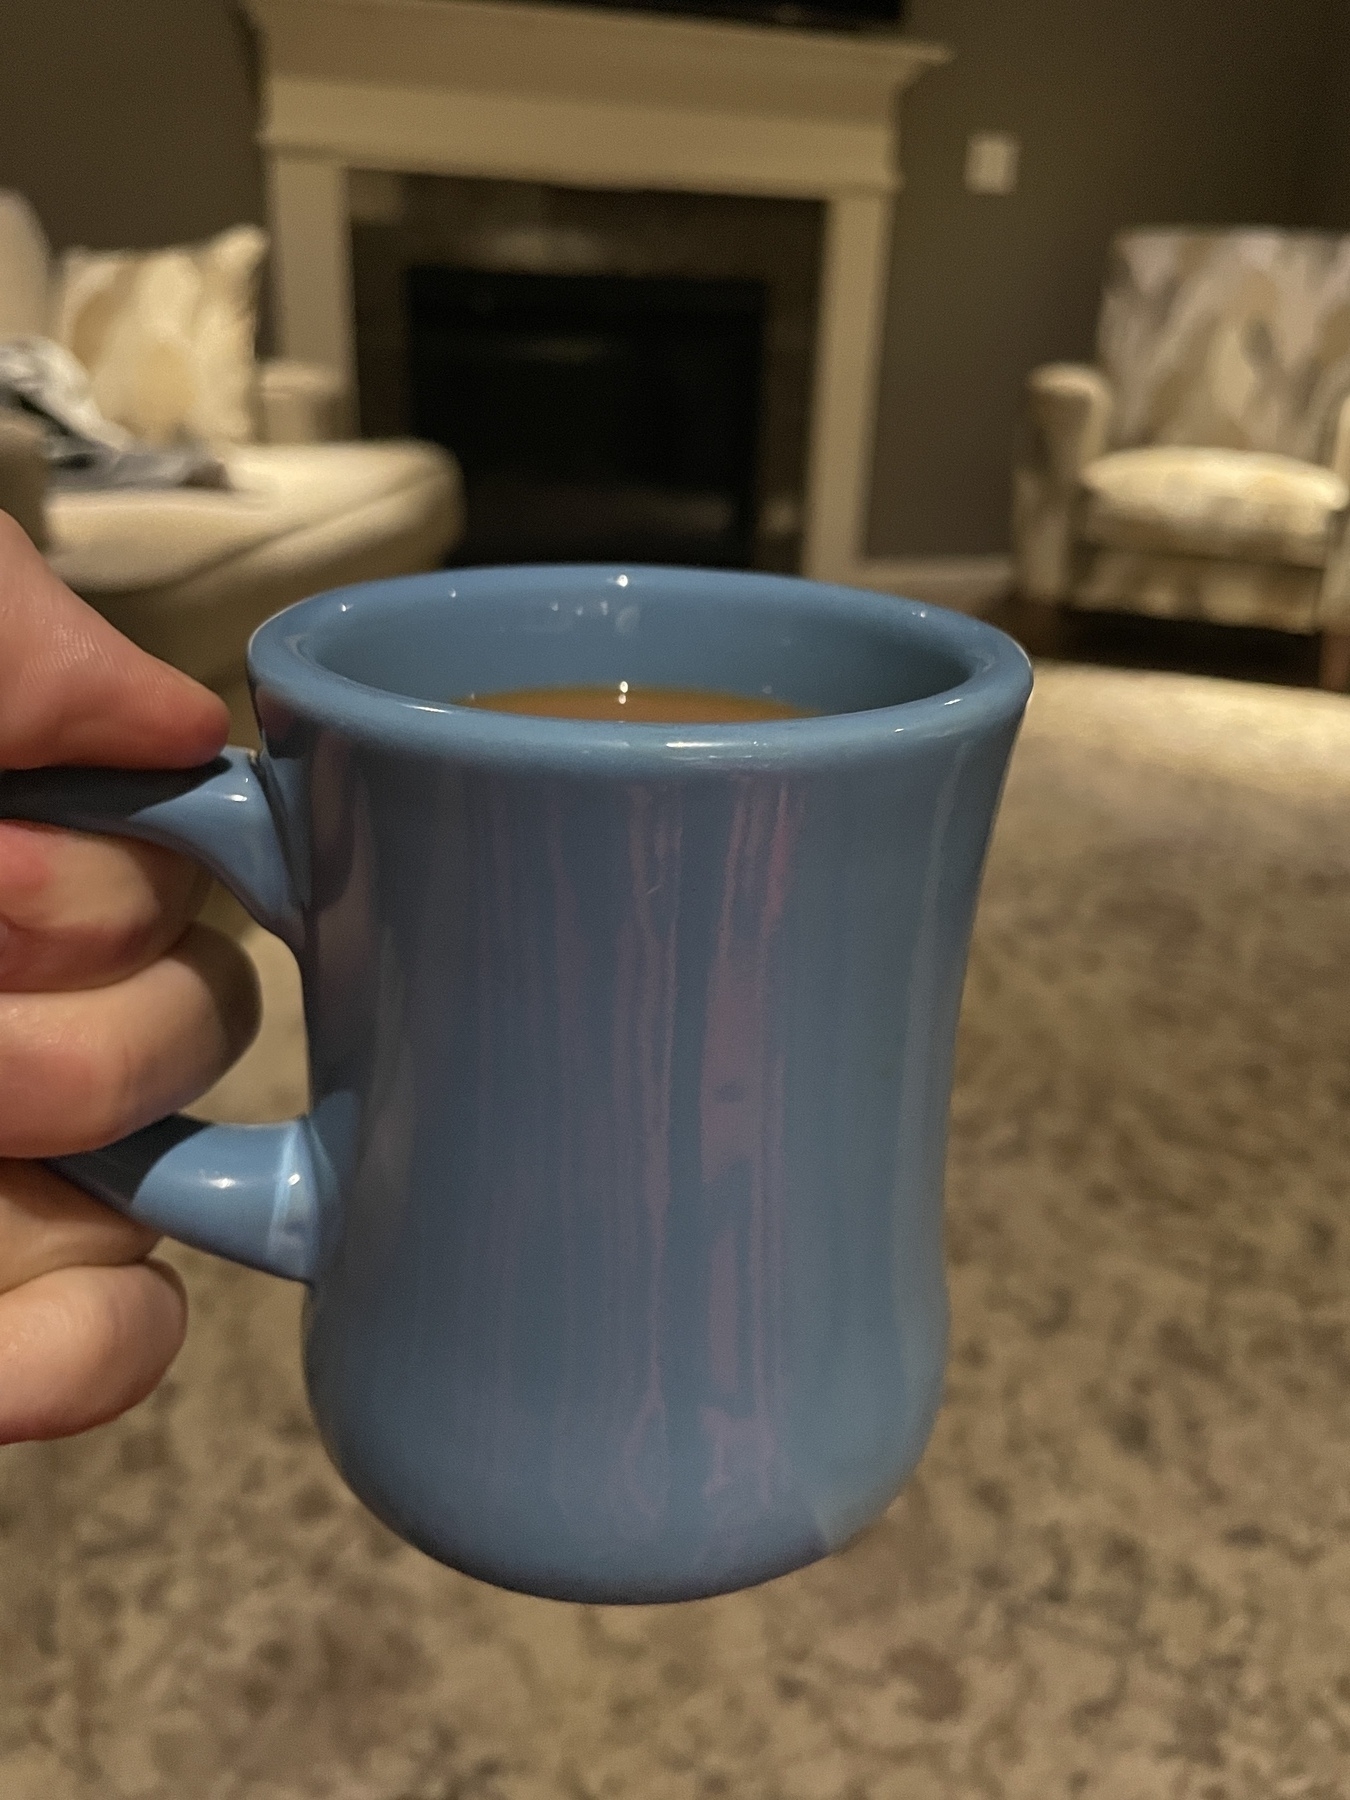 A coffee mug with delicious coffee